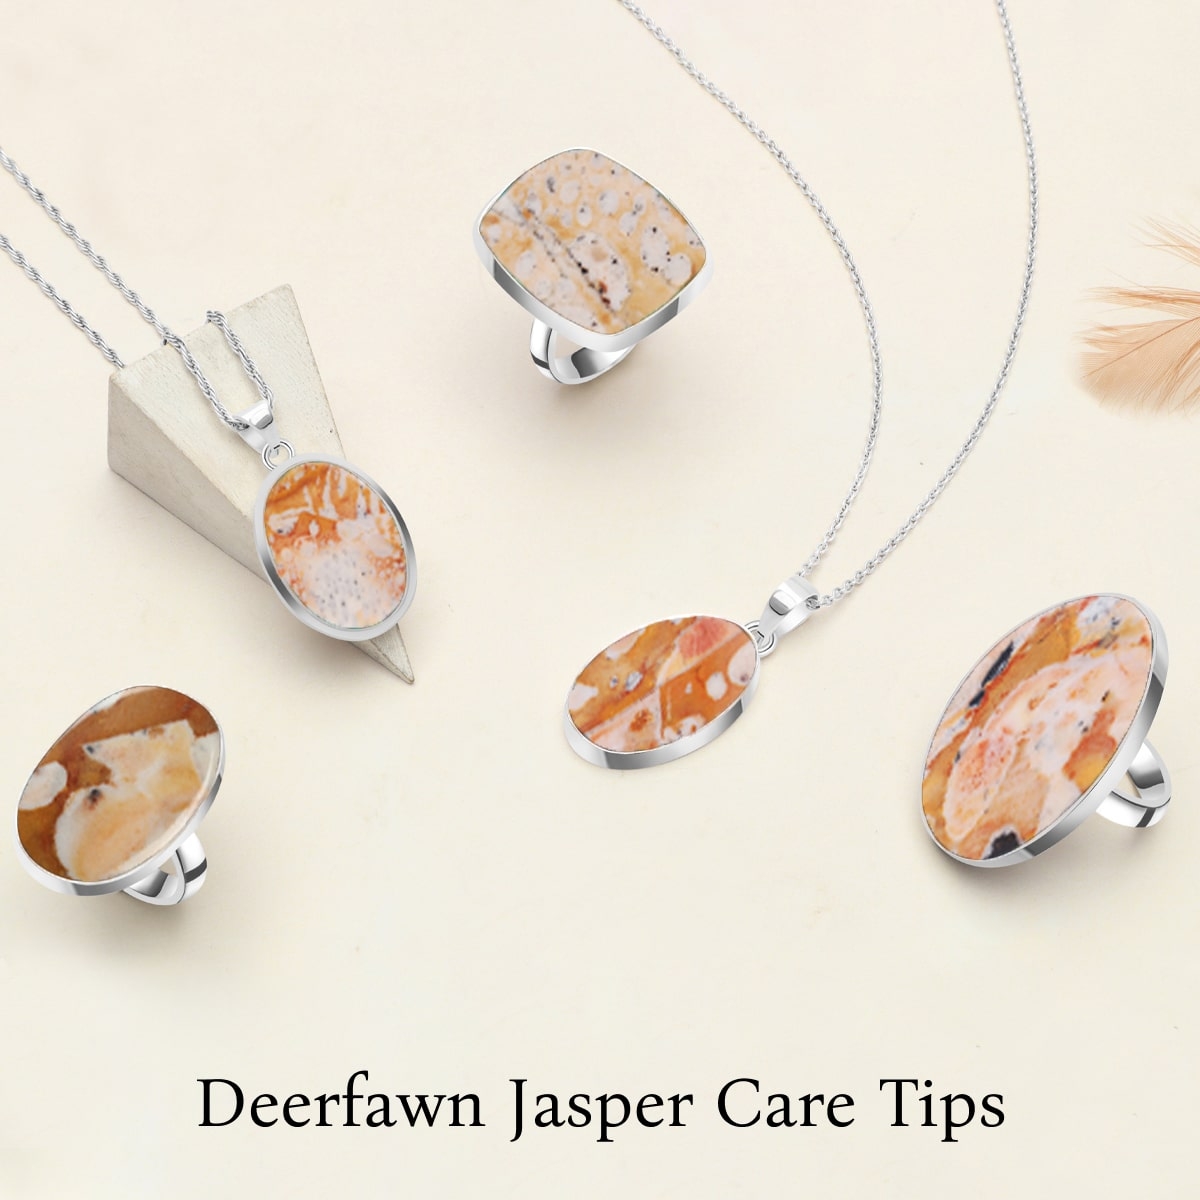 Caring For Your Deerfawn Jasper Jewel